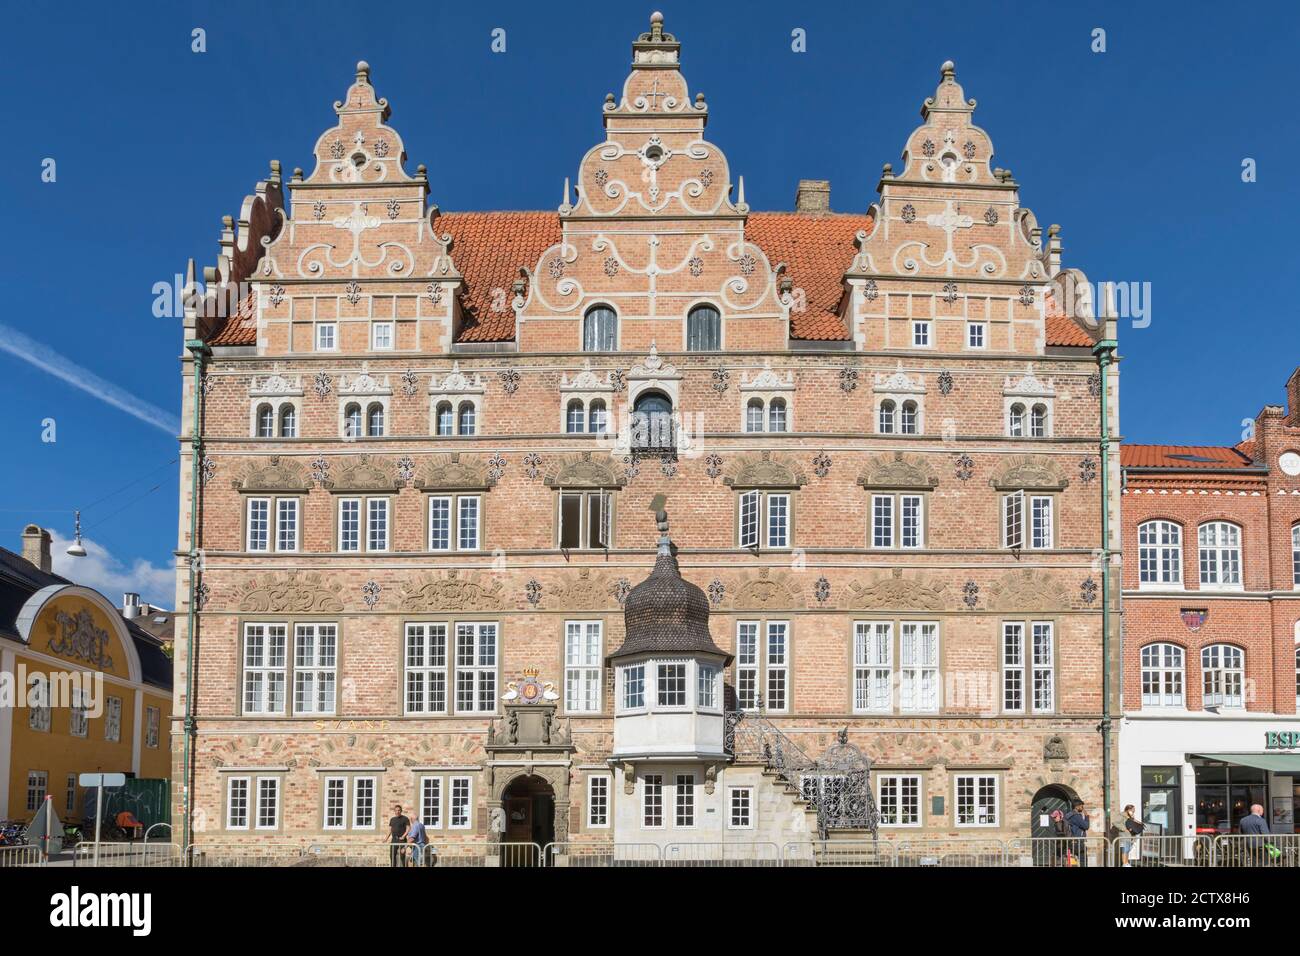 Aalborg, Dänemark - 1. September 2020: Jens Bang’s Haus, ein großes Gebäude im Renaissance-Stil, das im 17. Jahrhundert die Swan Pharmacy enthielt. Stockfoto